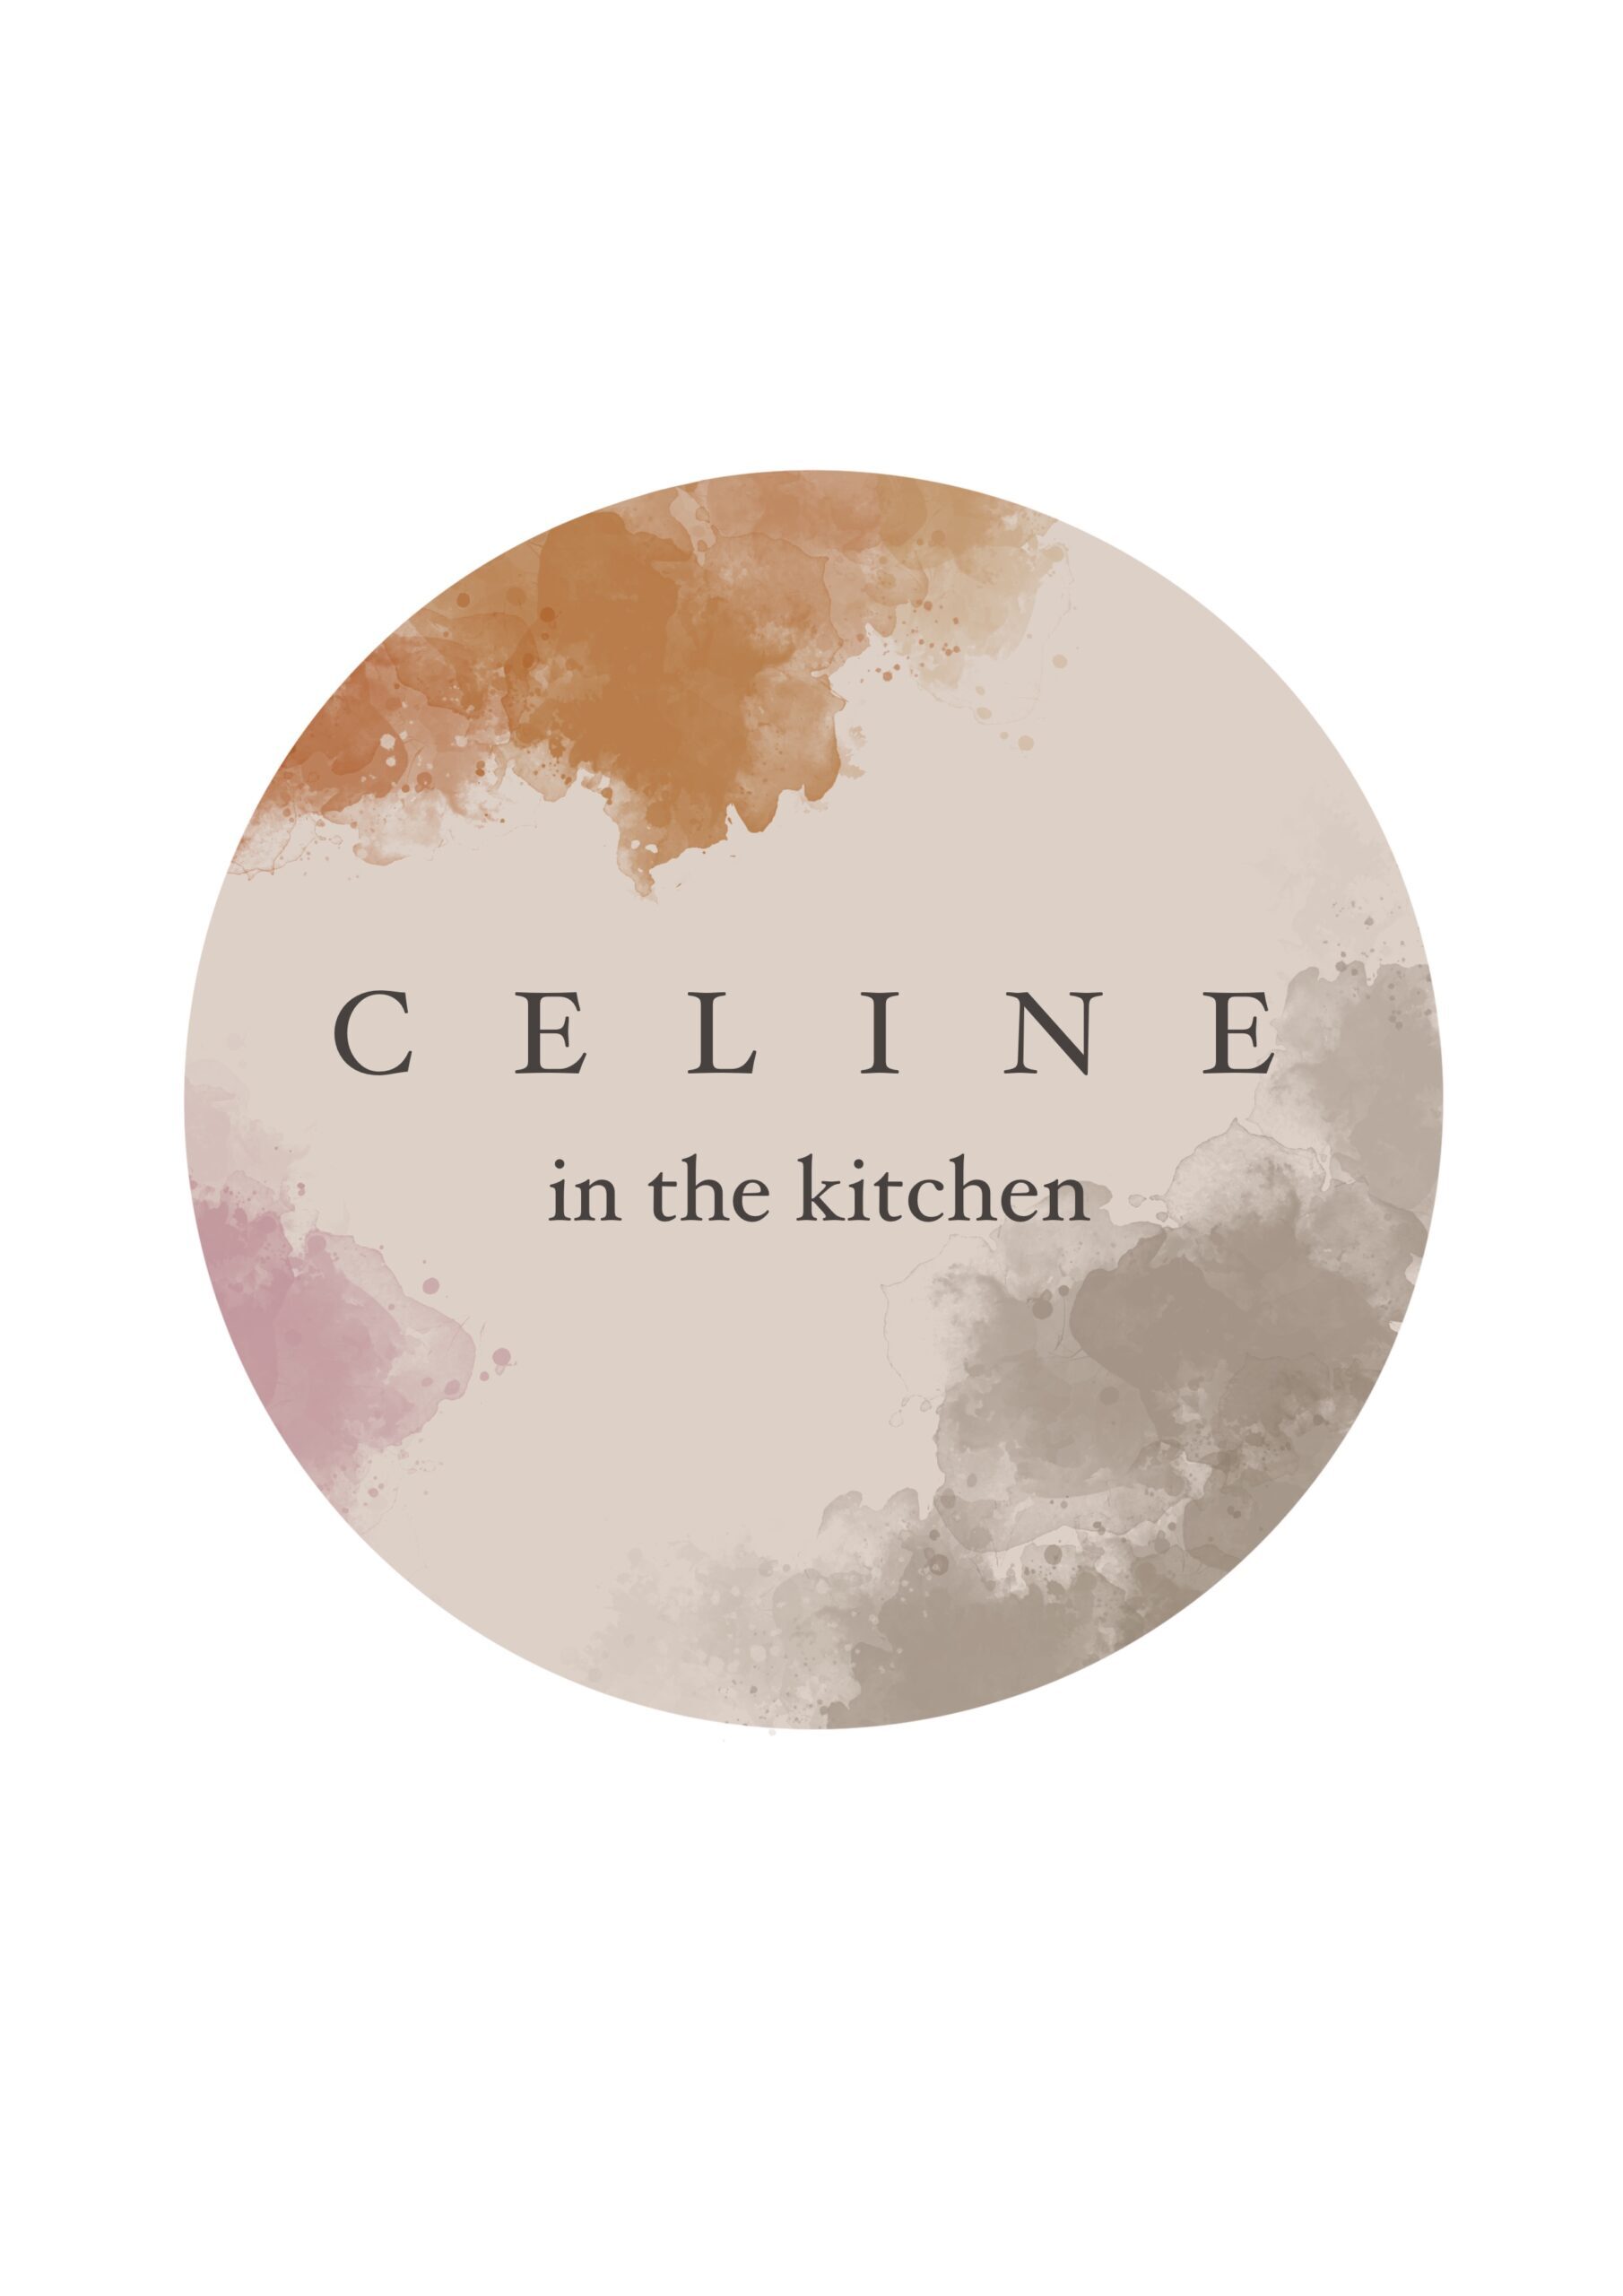 Celine in the kitchen